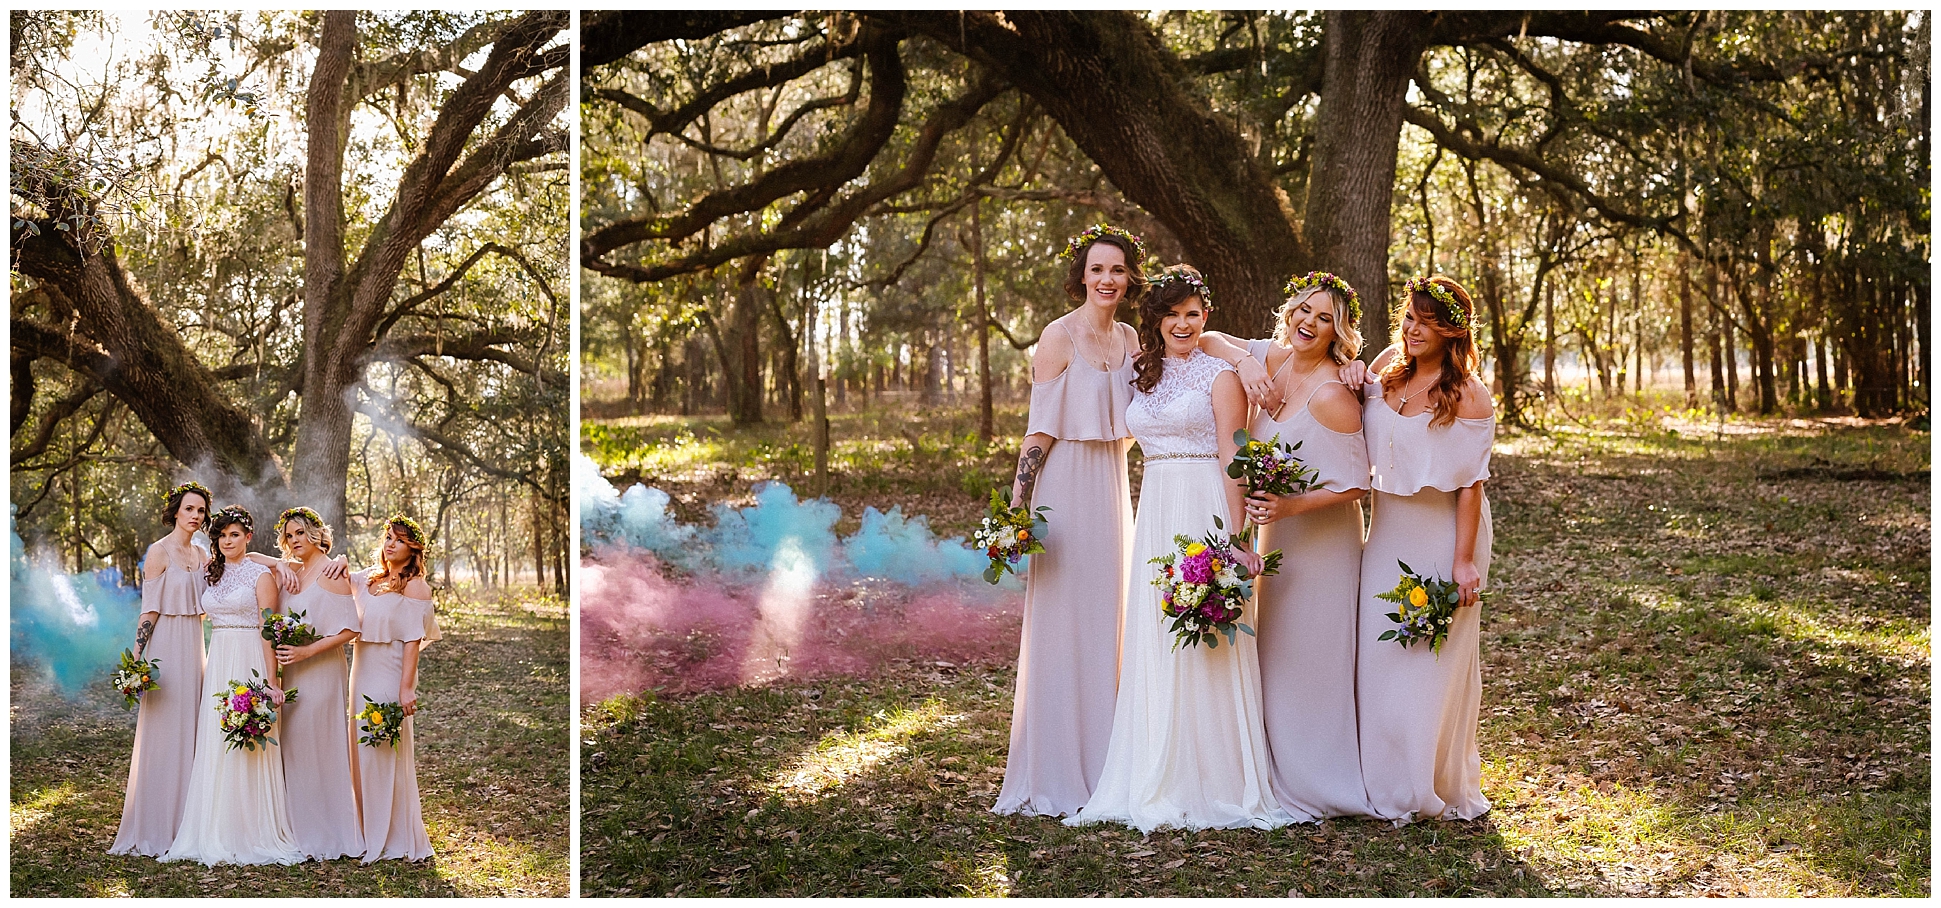 magical-outdoor-florida-wedding-smoke-bombs-flowers-crown-beard_0022.jpg